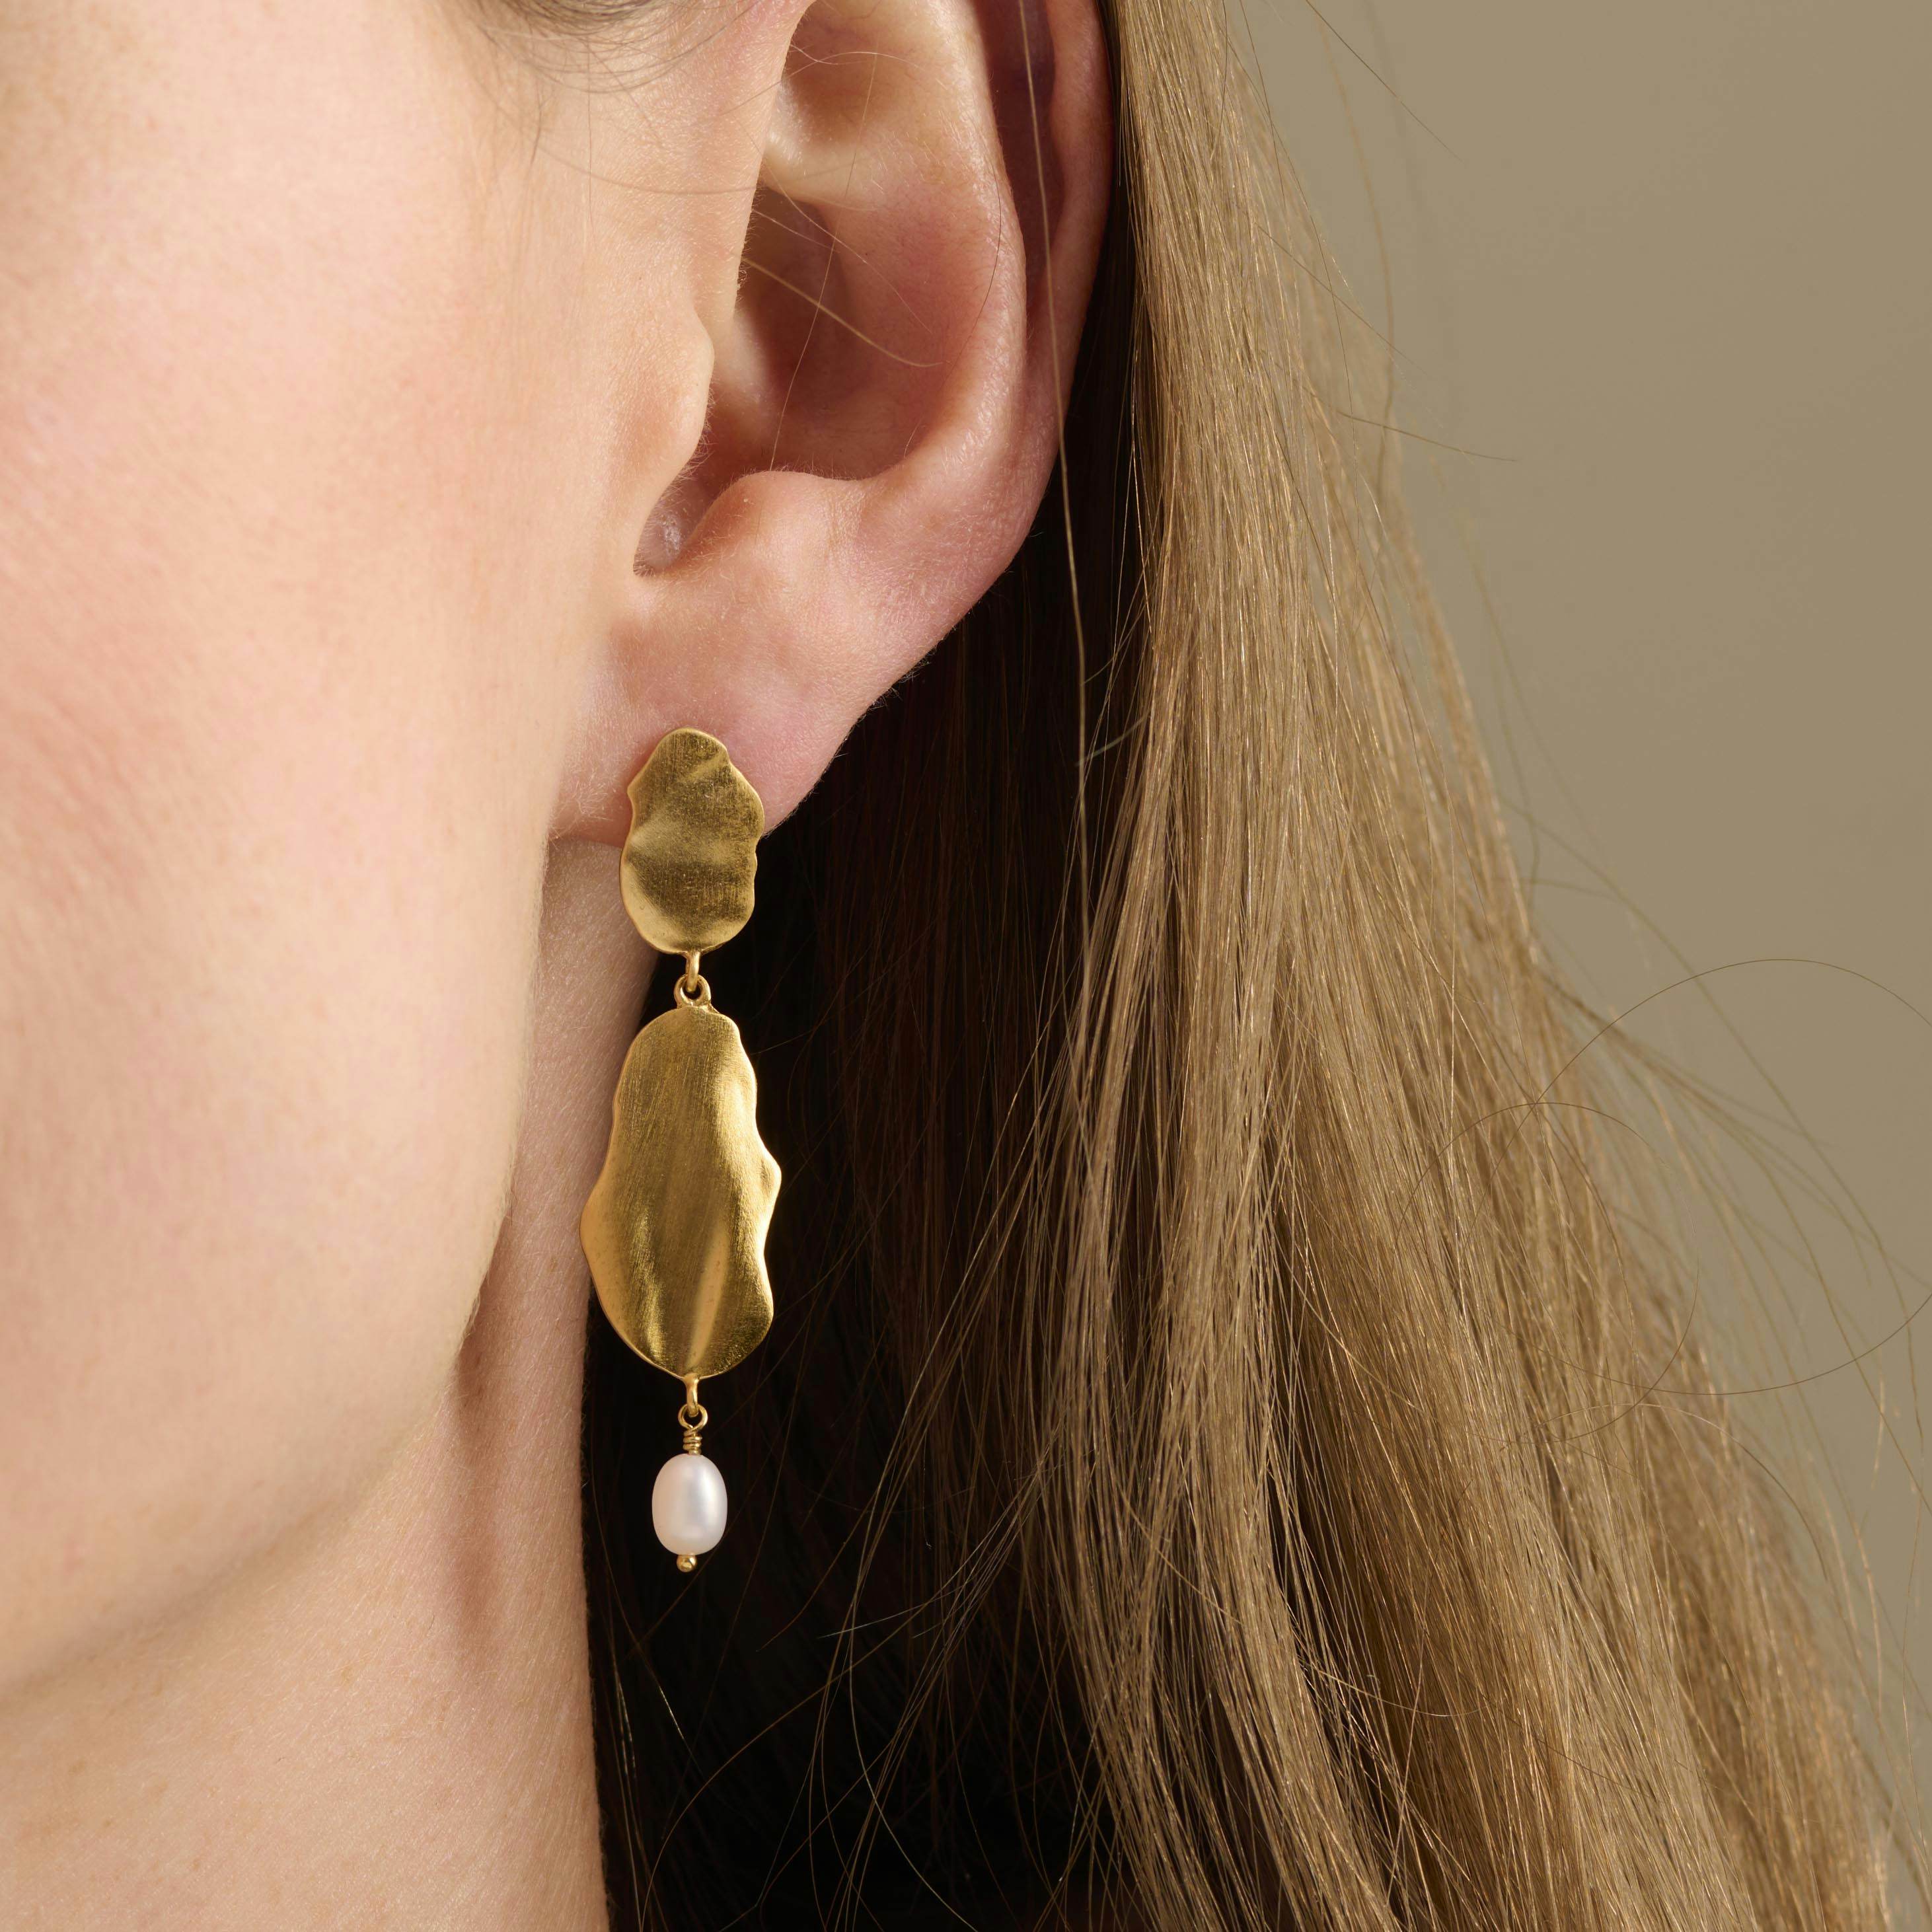 Drift Earrings von Pernille Corydon in Silber Sterling 925